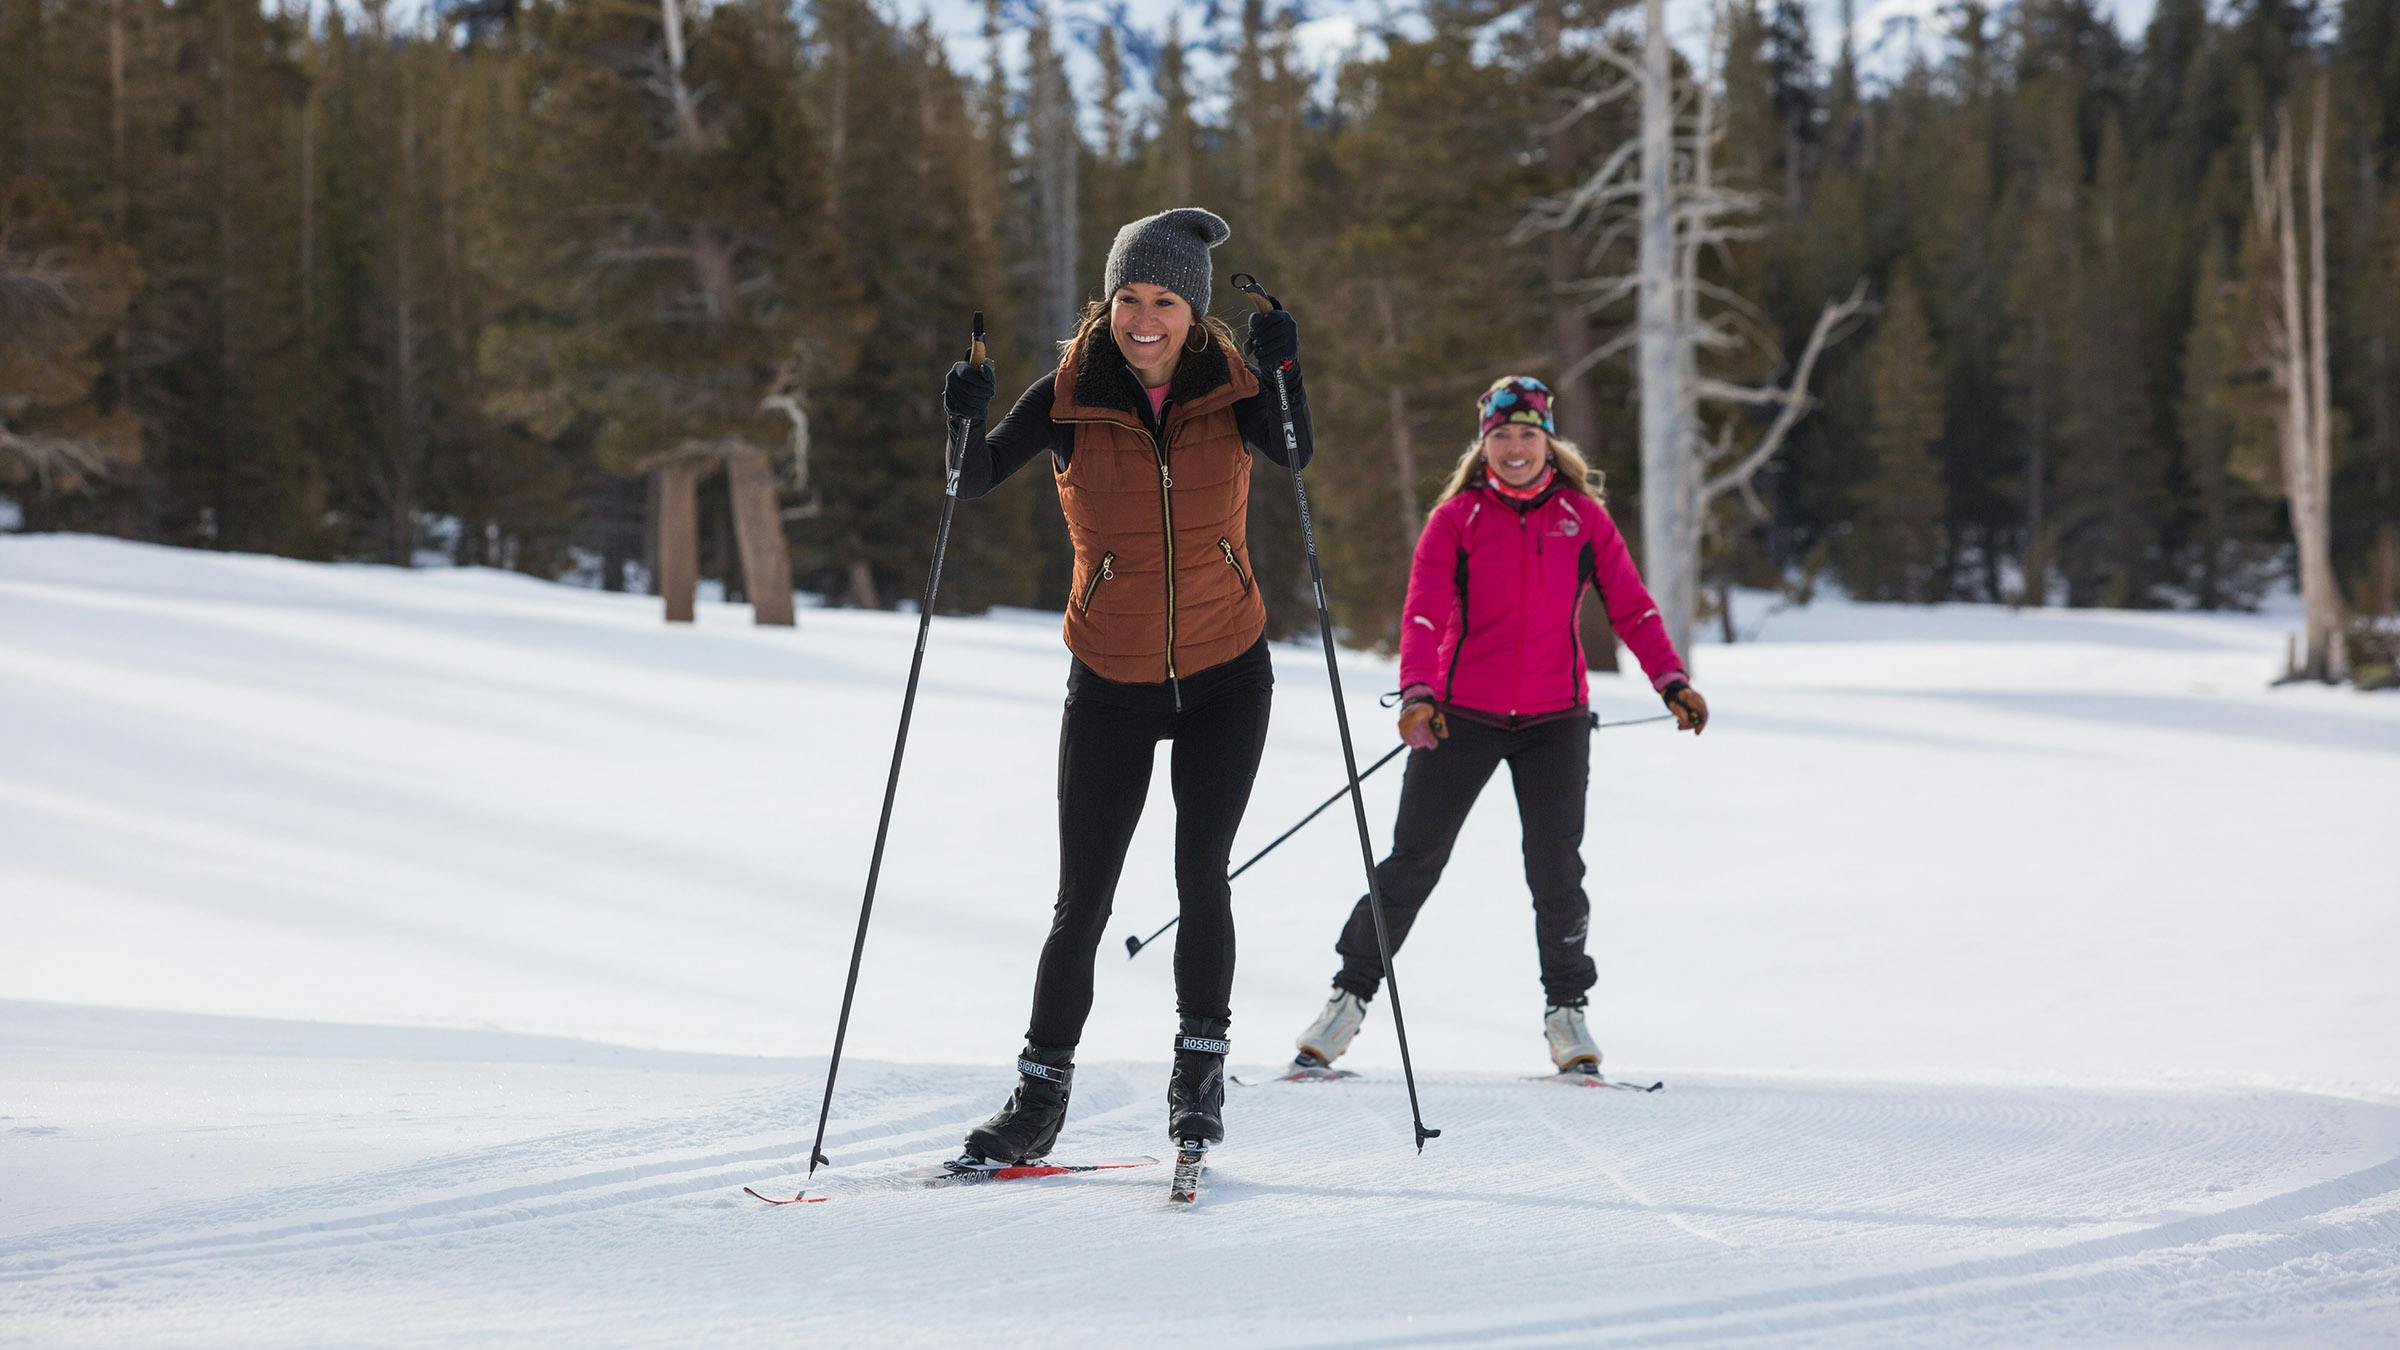 Two women cross-country skiing